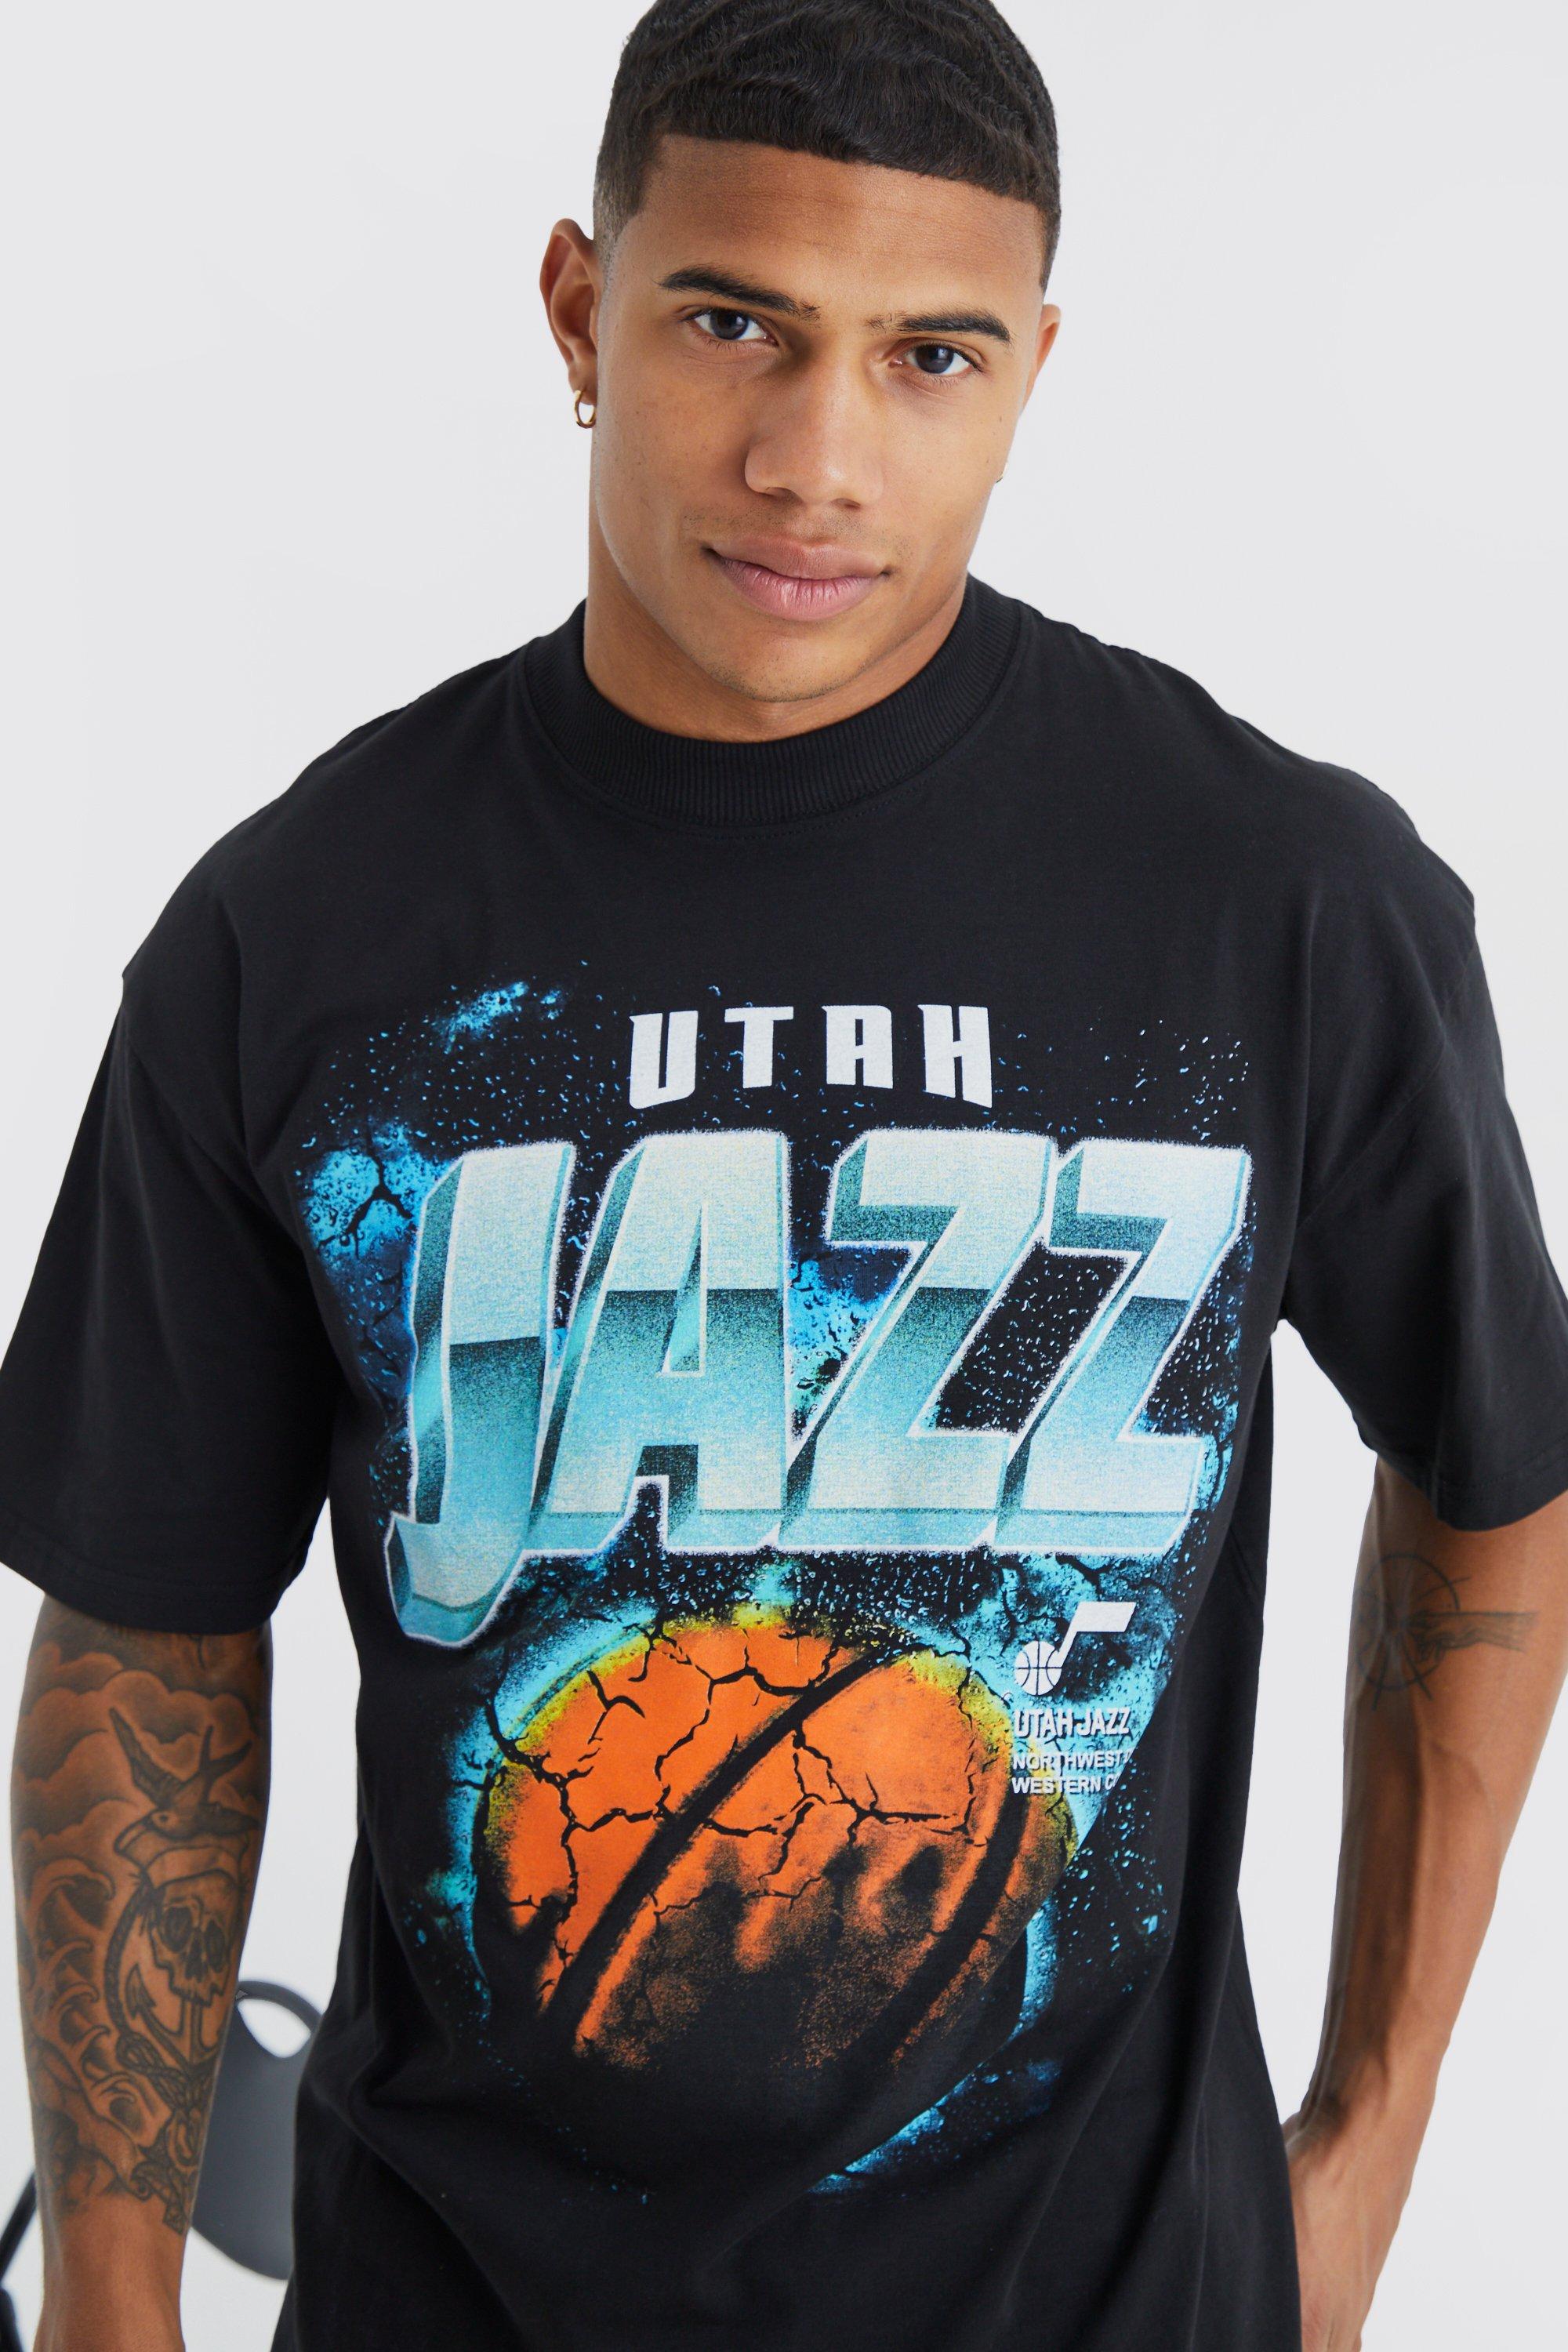 Utah Jazz NBA License T Shirt